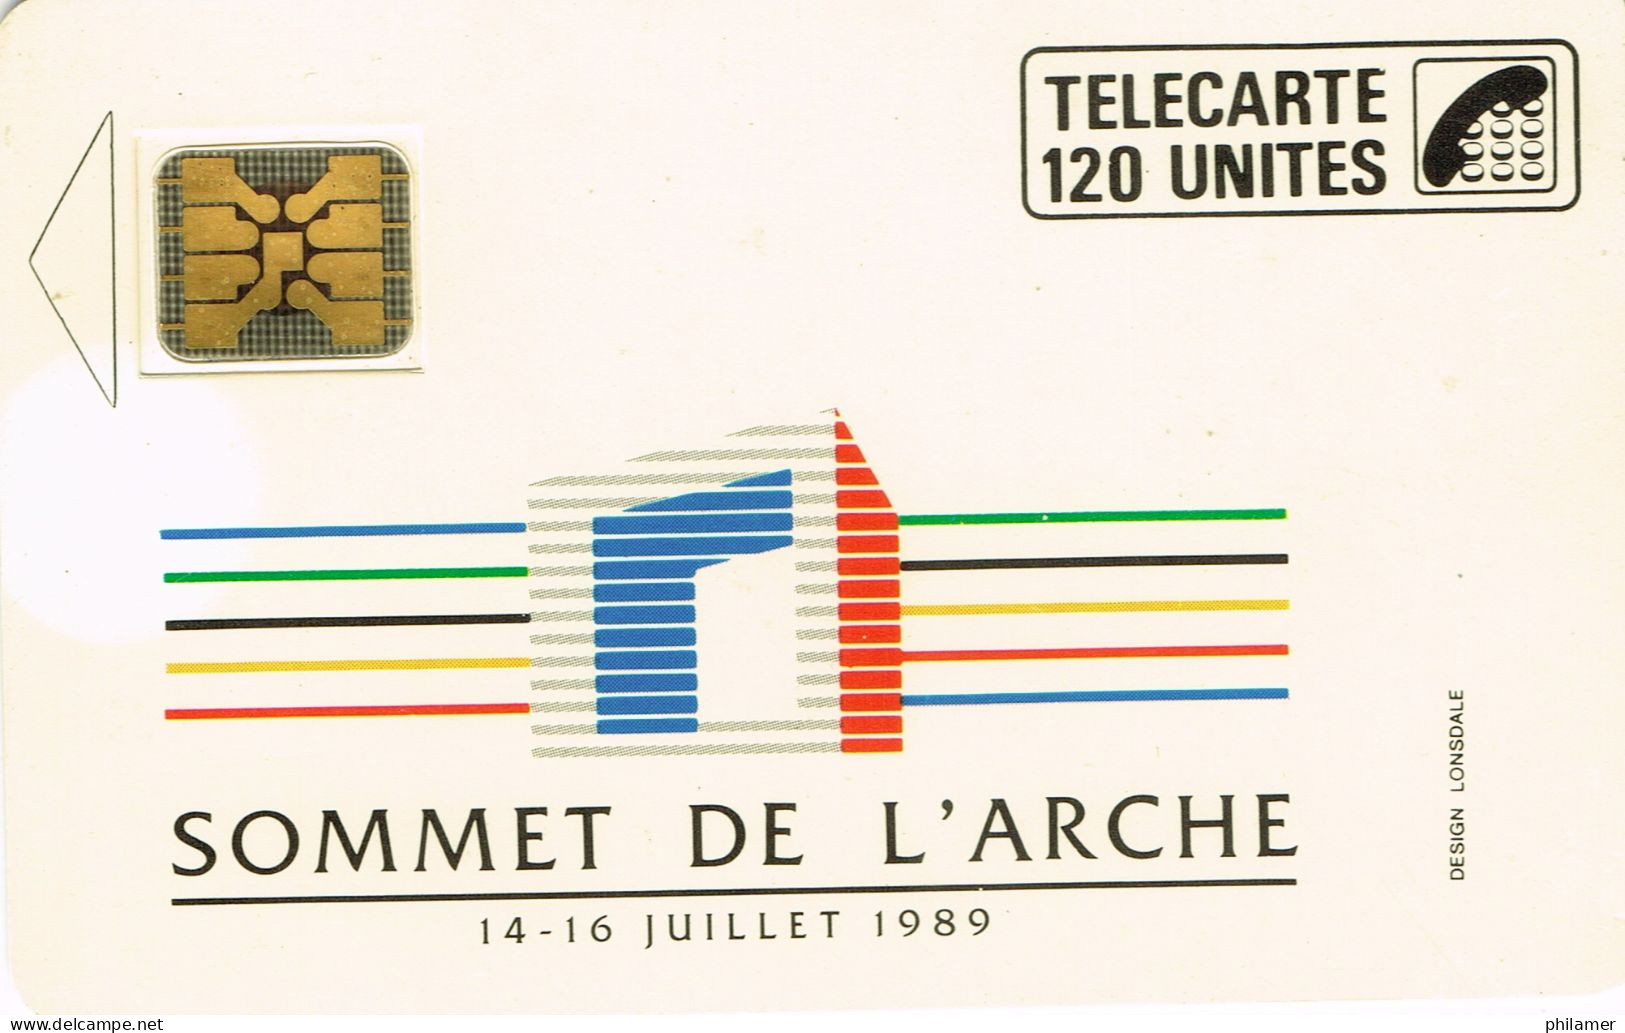 France French Telecarte Phonecard Interne C42 Sommet De L'arche 1989 France Telecom Paris UT BE - Phonecards: Internal Use